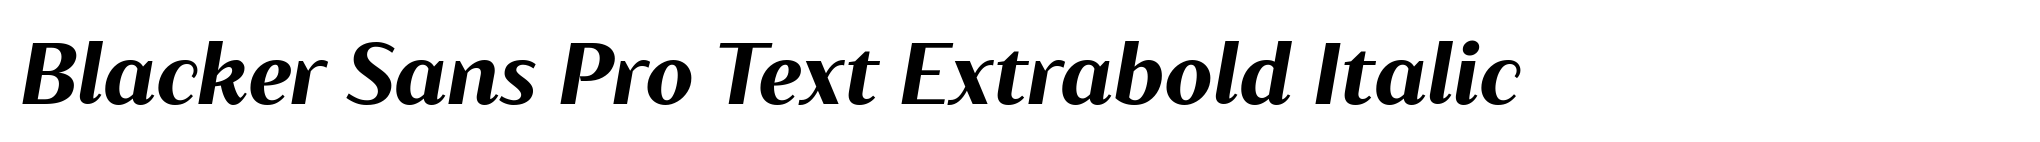 Blacker Sans Pro Text Extrabold Italic image